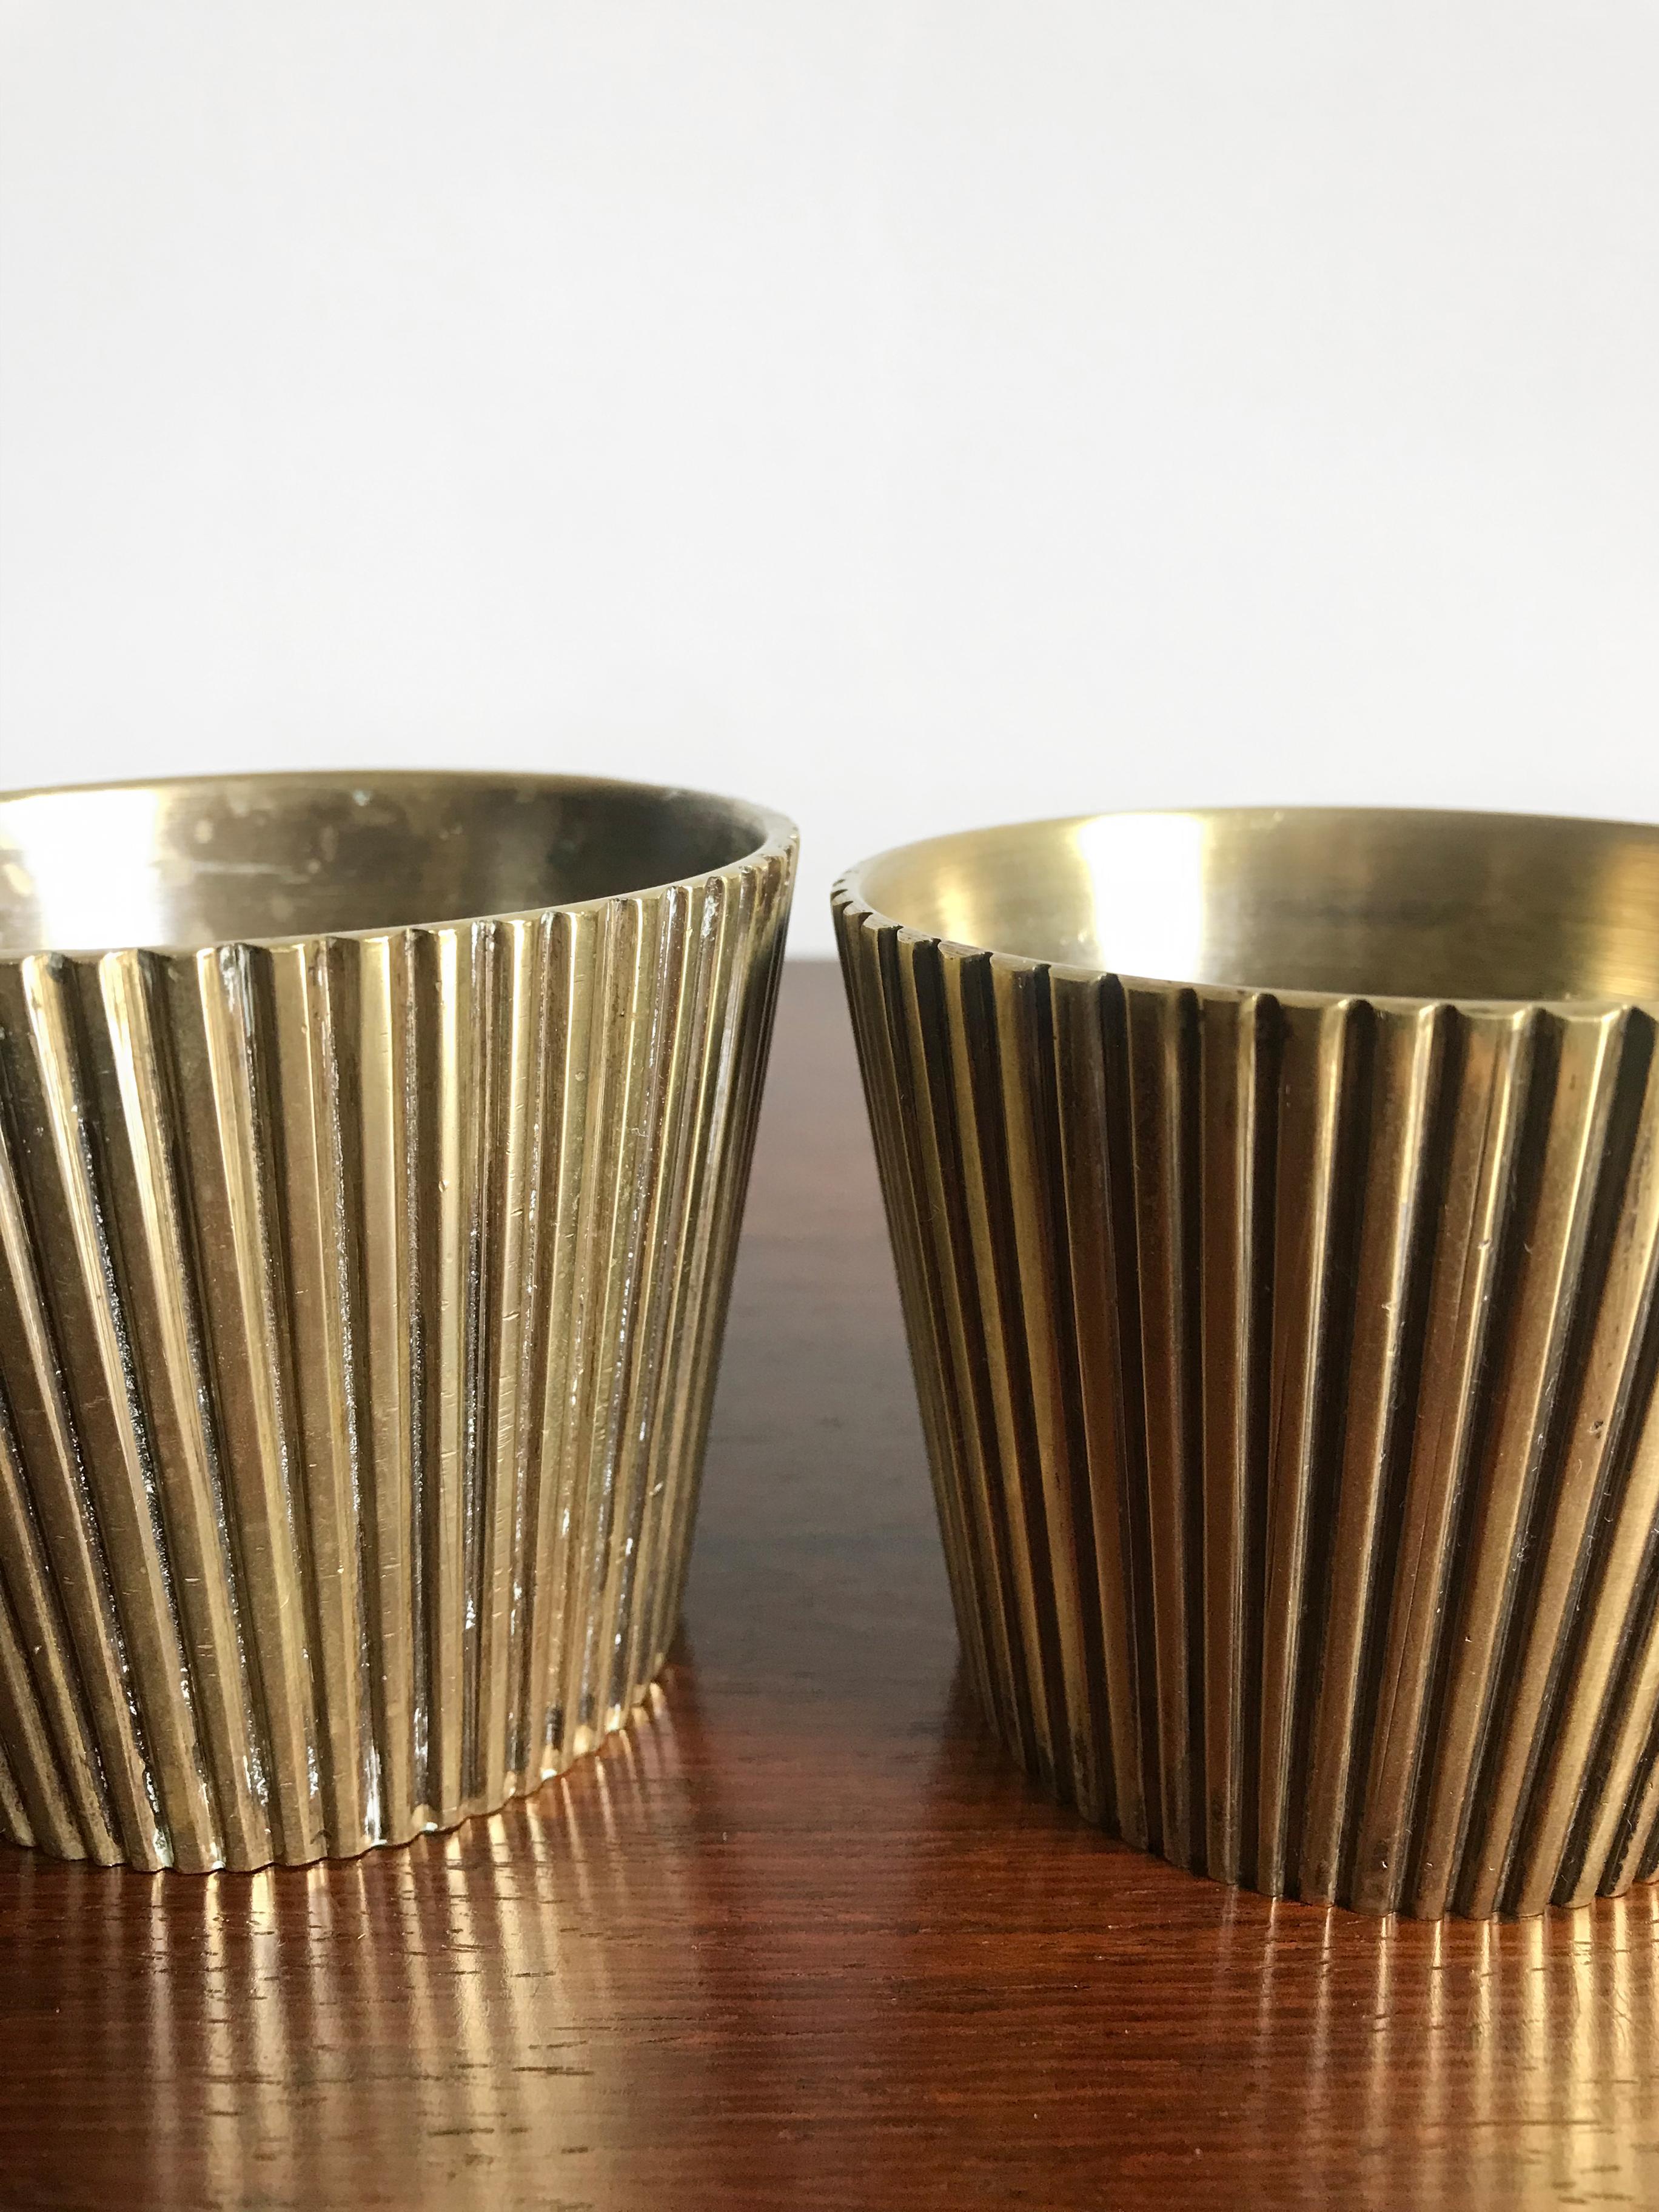 Danish Scandinavian Midcentury Modern Design Brass Vases 1950s